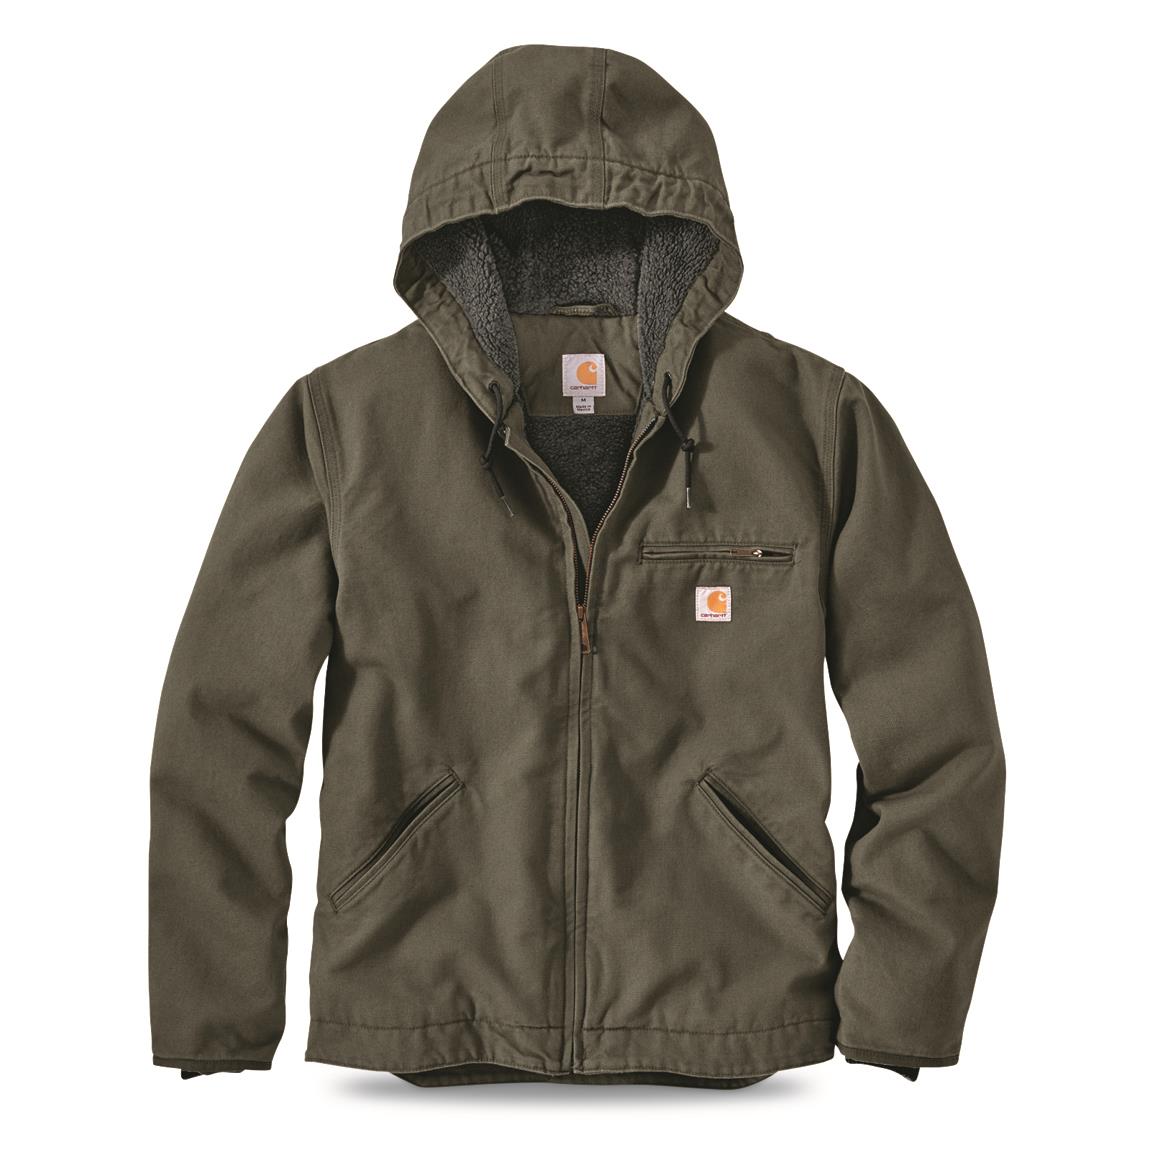 Carhartt Men's Washed Duck Sherpa-lined Jacket, Moss